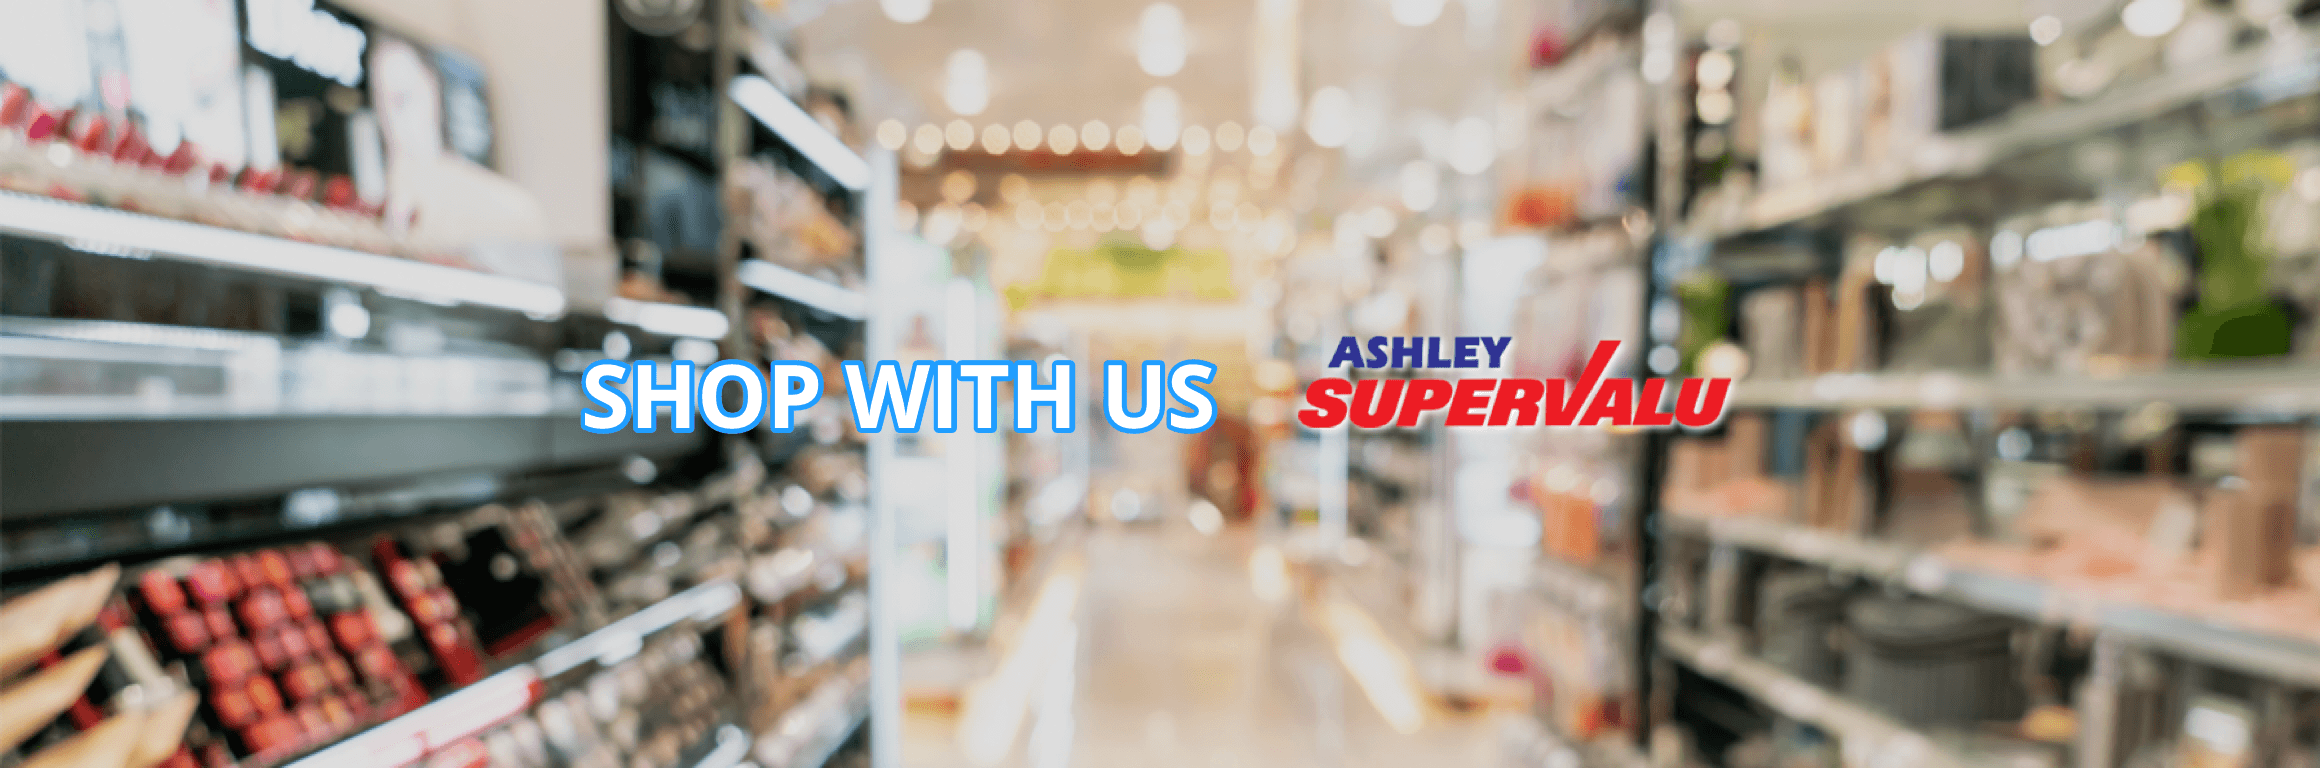 SHOP WITH US | Ashley SuperValu